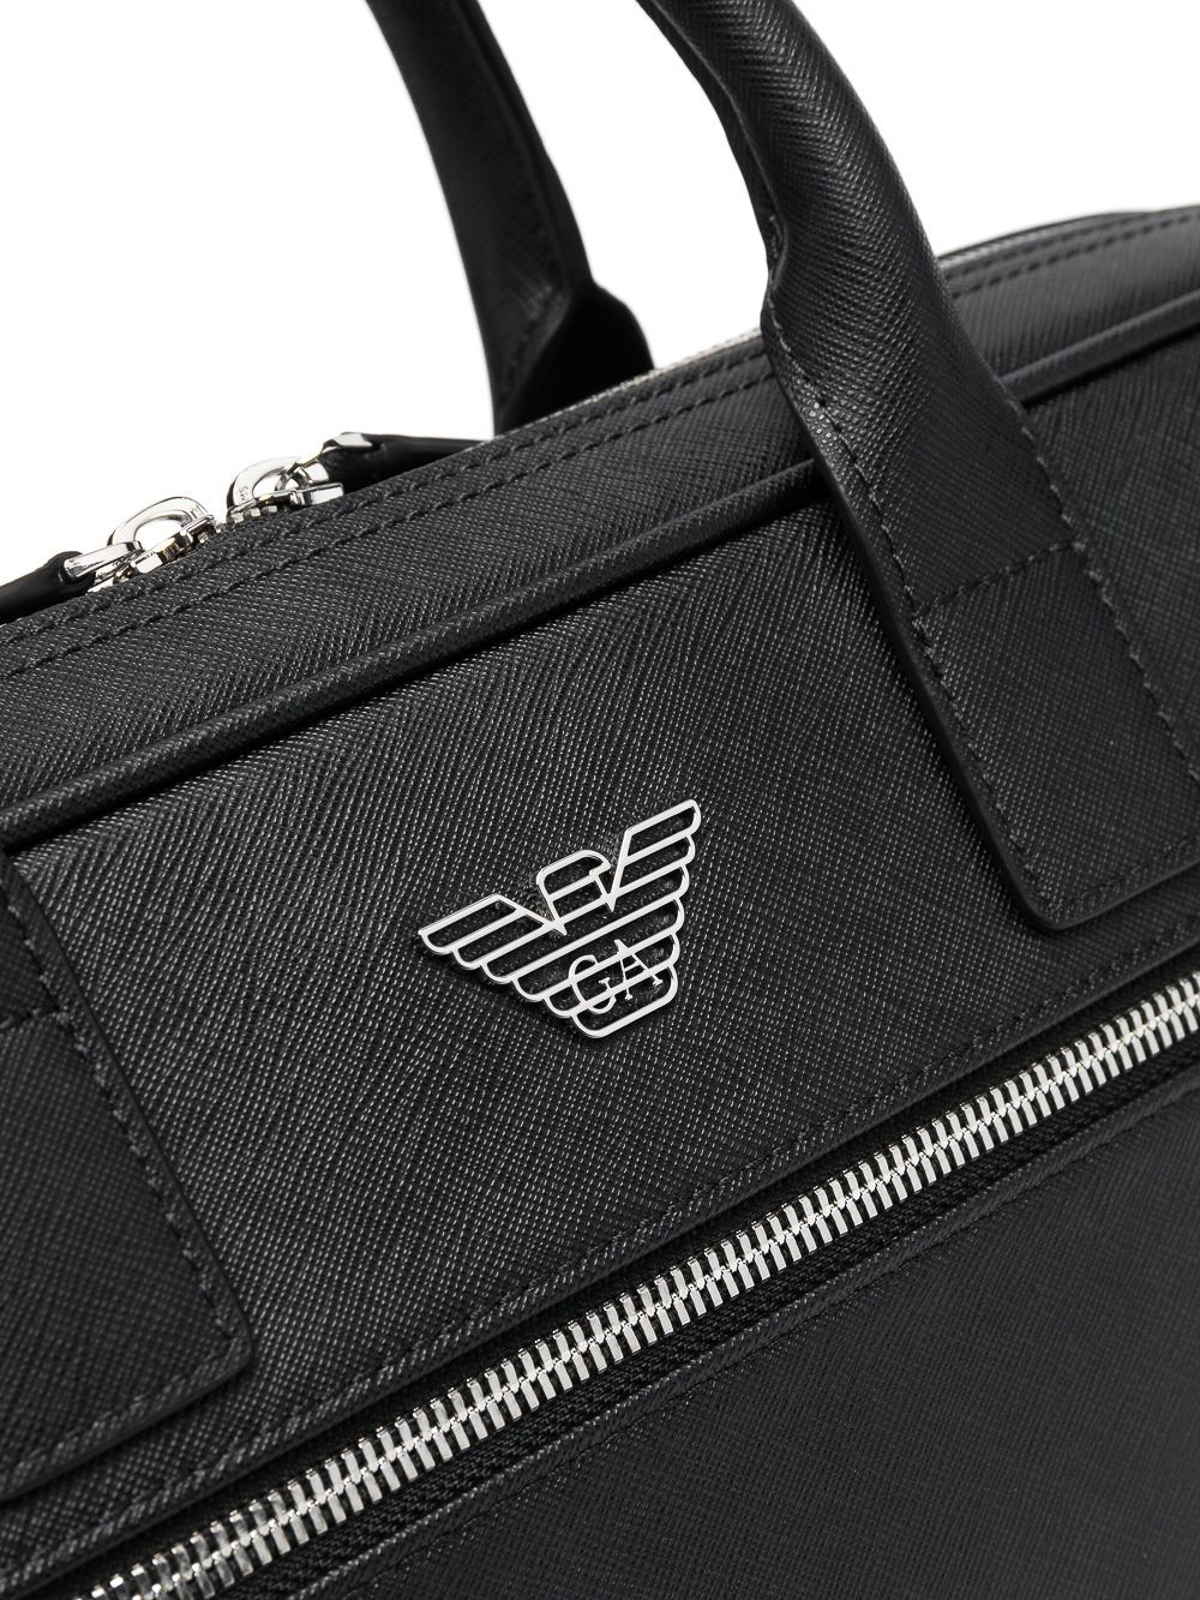 Bags | Laptop Bag With Td Logo | Poshmark